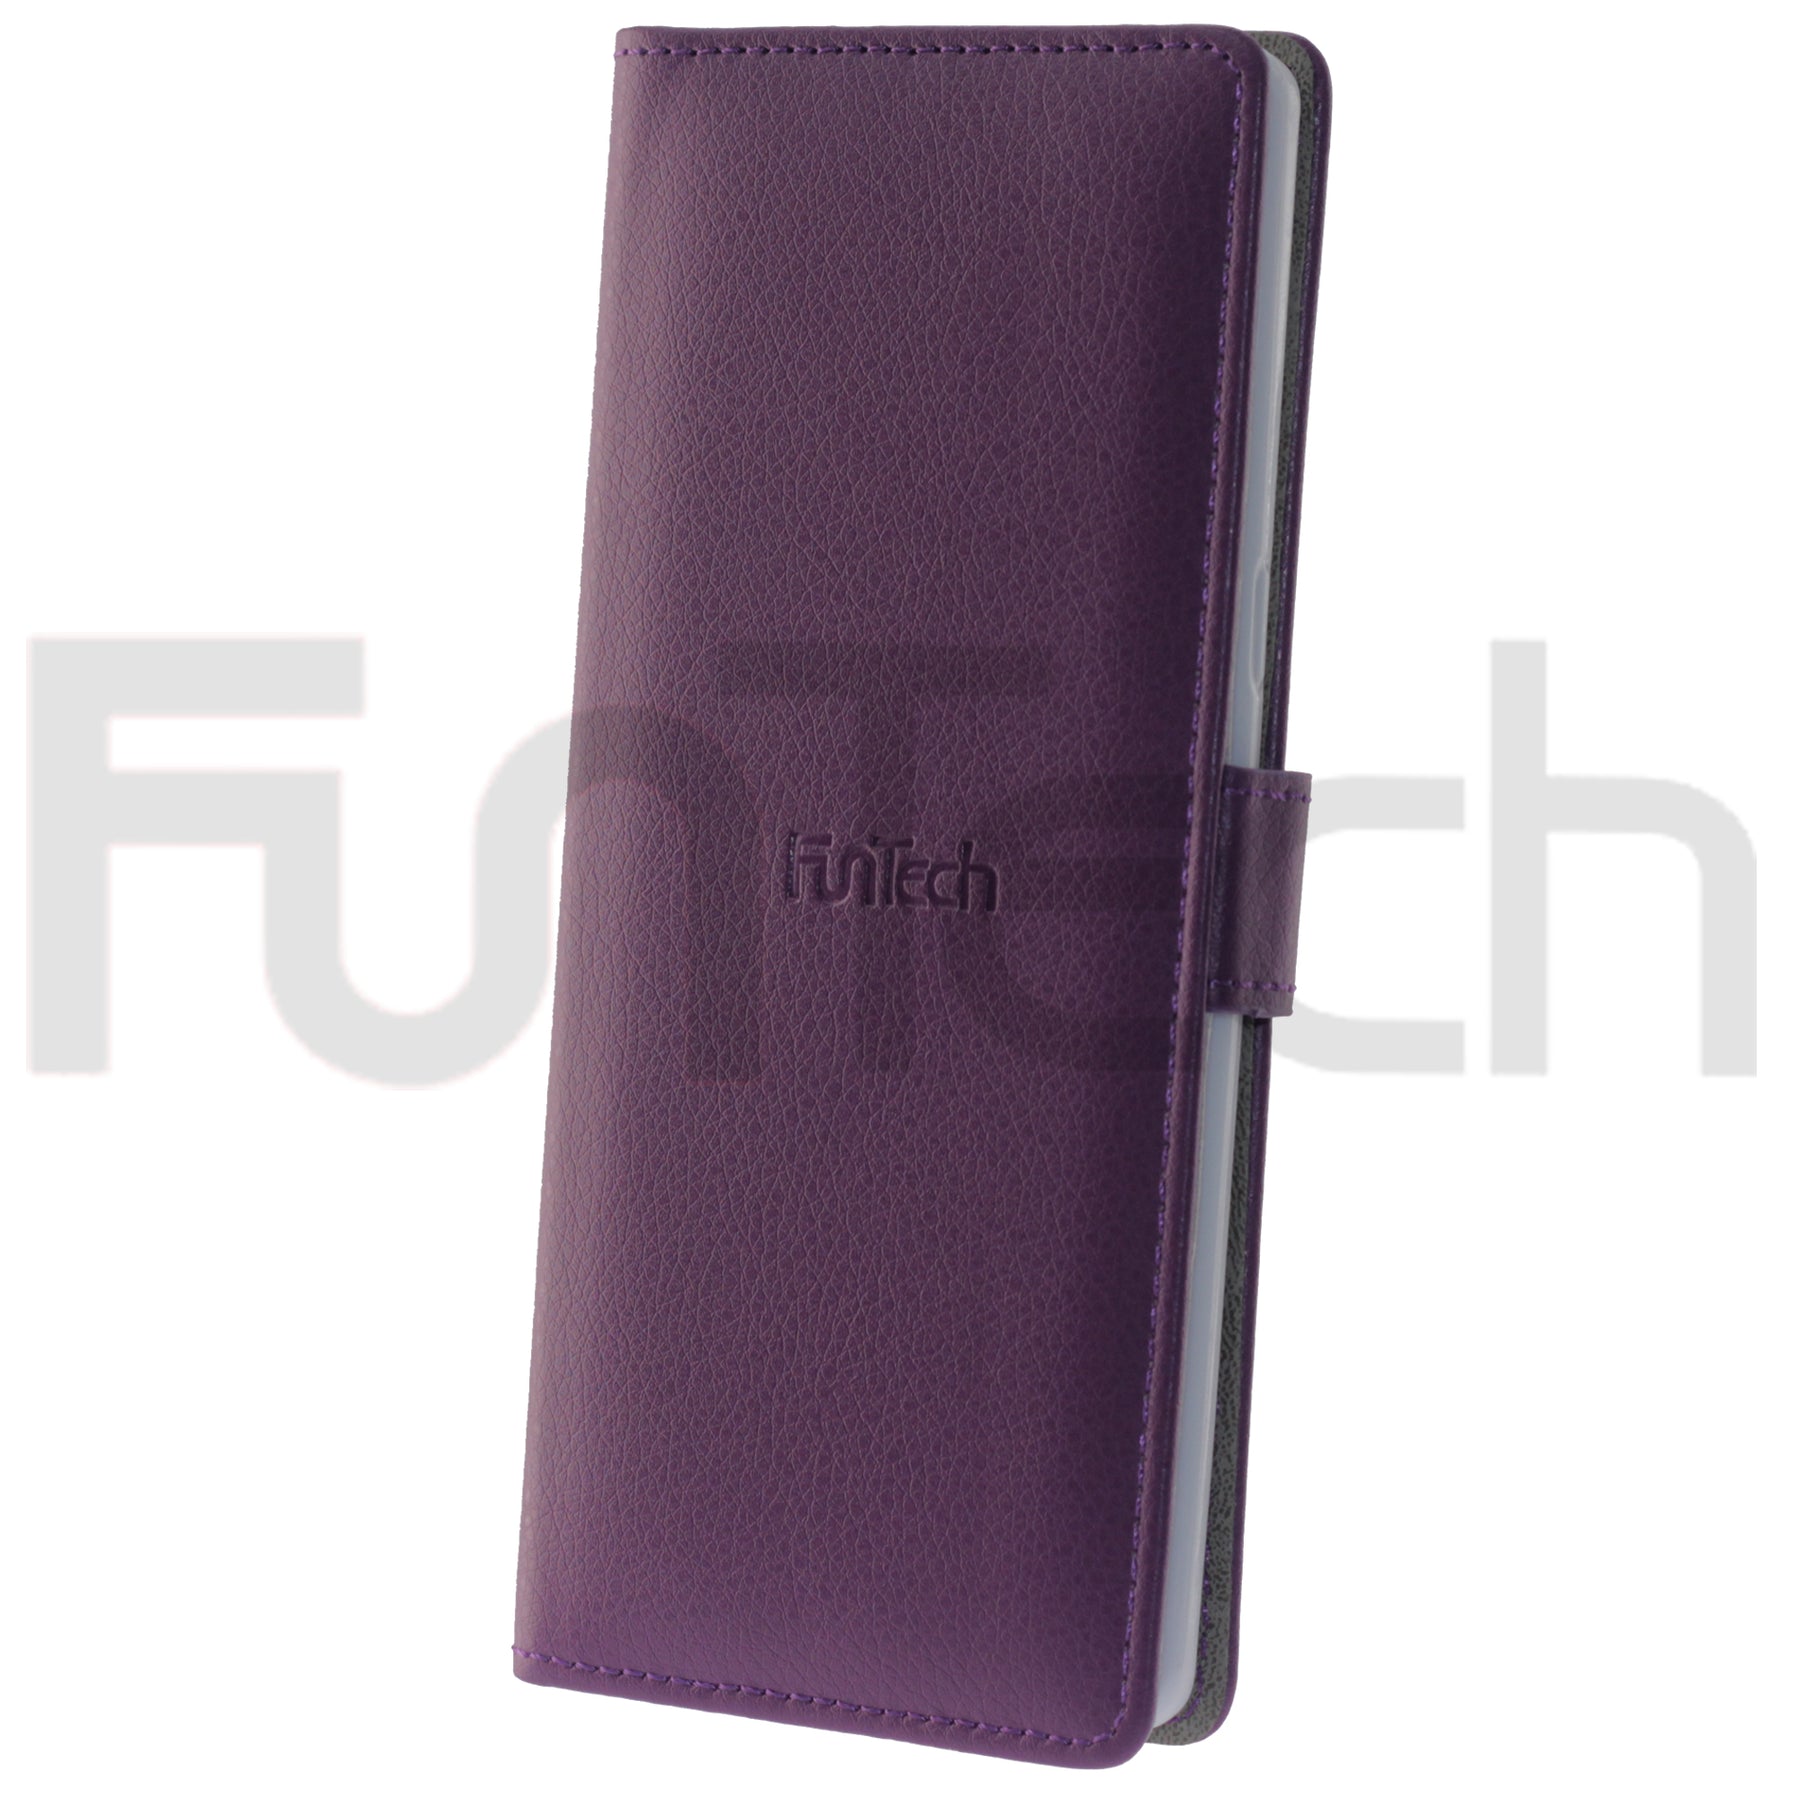 Samsung Note 8, Leather Wallet Case, Color Purple.